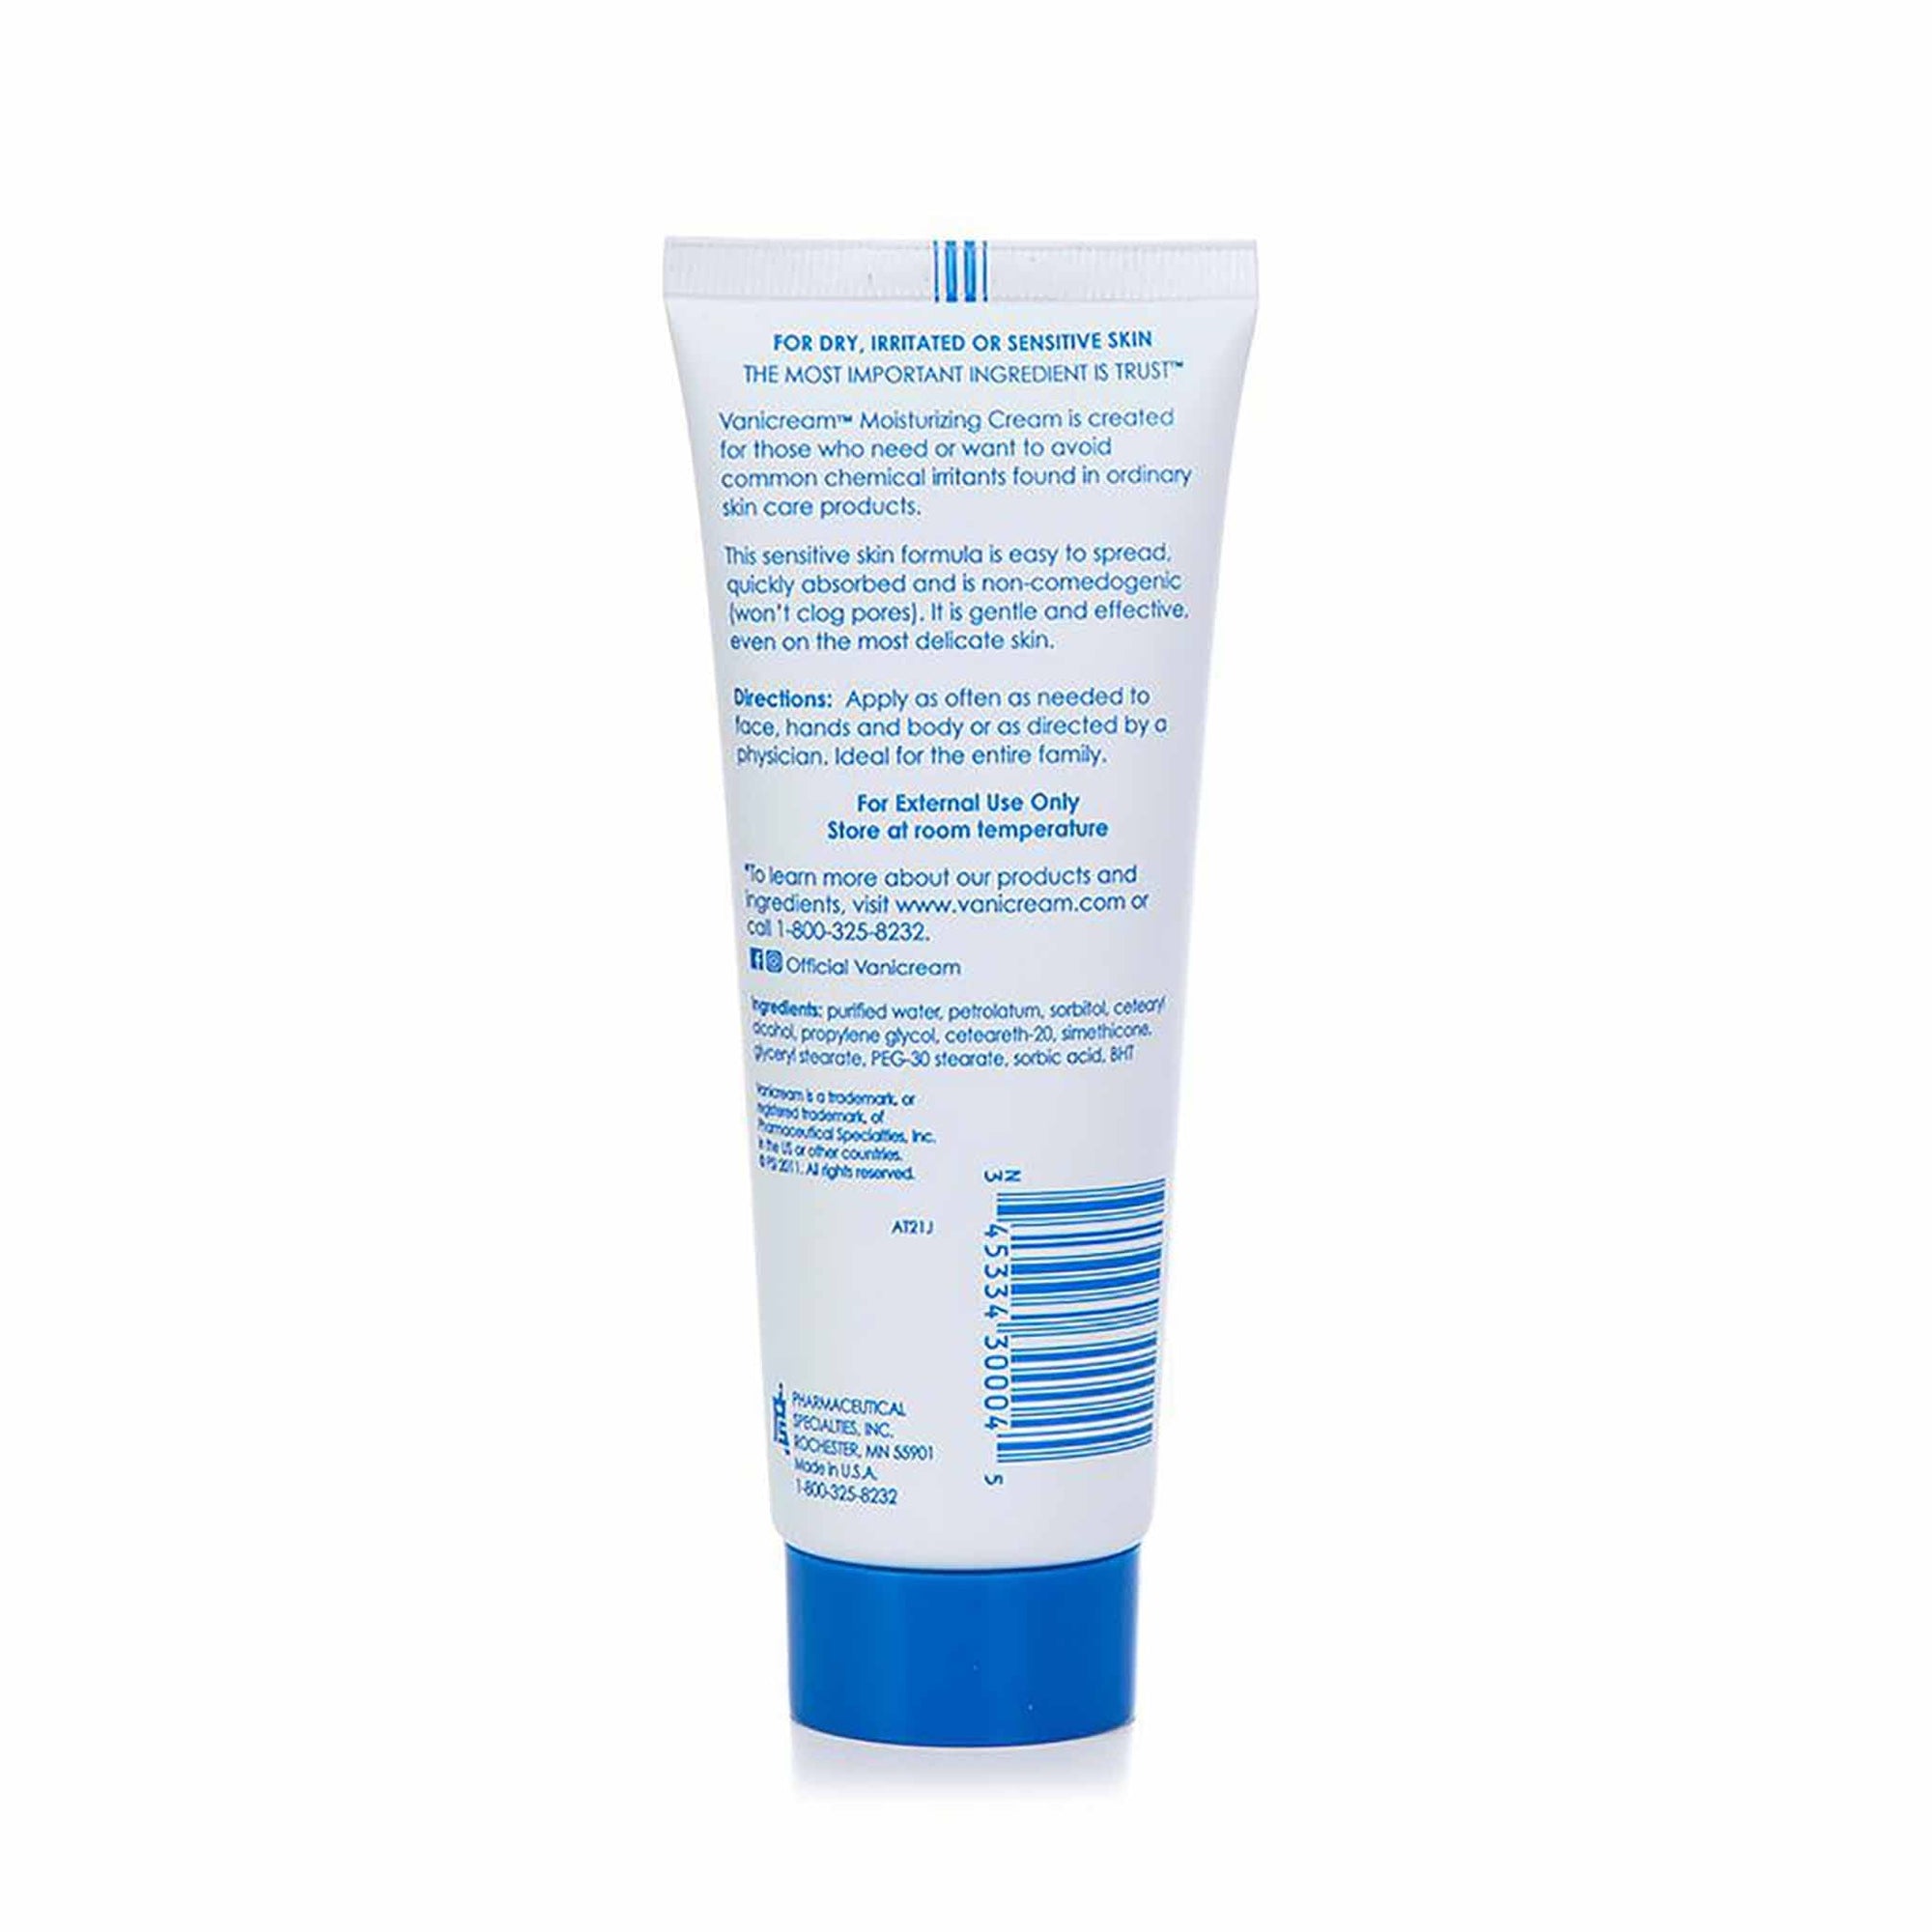 Vanicream skin cream is a non-greasy, long-lasting moisturizing cream